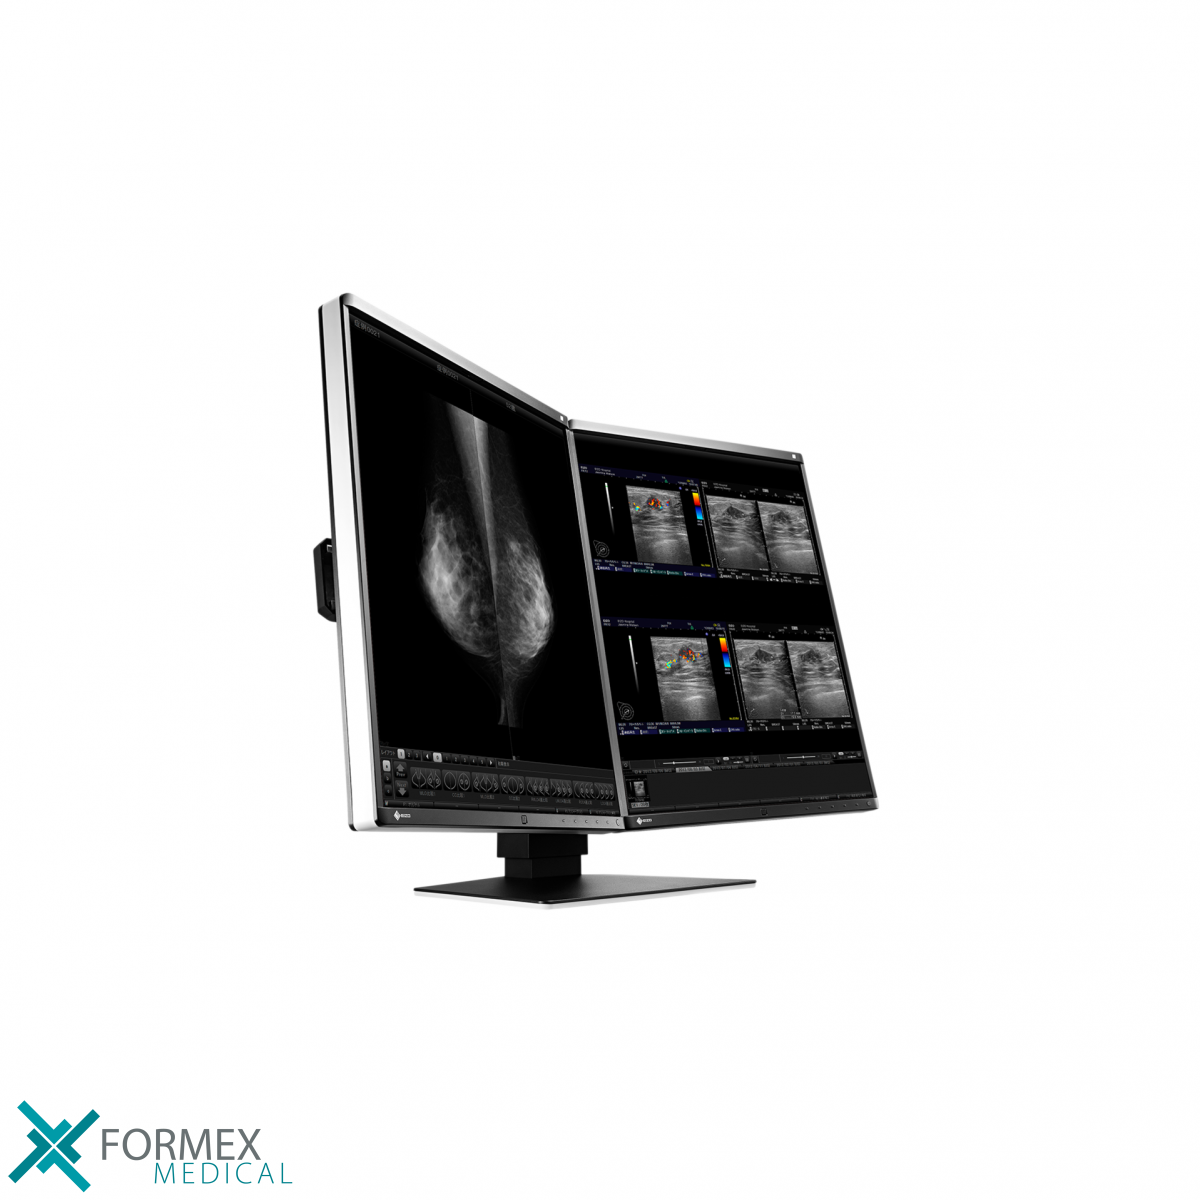 Eizo RX560-MD RadiForce, eizo monitor, medical displays, medische schermen, eizo medical monitor, medische monitoren, eizo medical, medische beeldschermen, diagnostische monitoren, diagnostiek monitoren